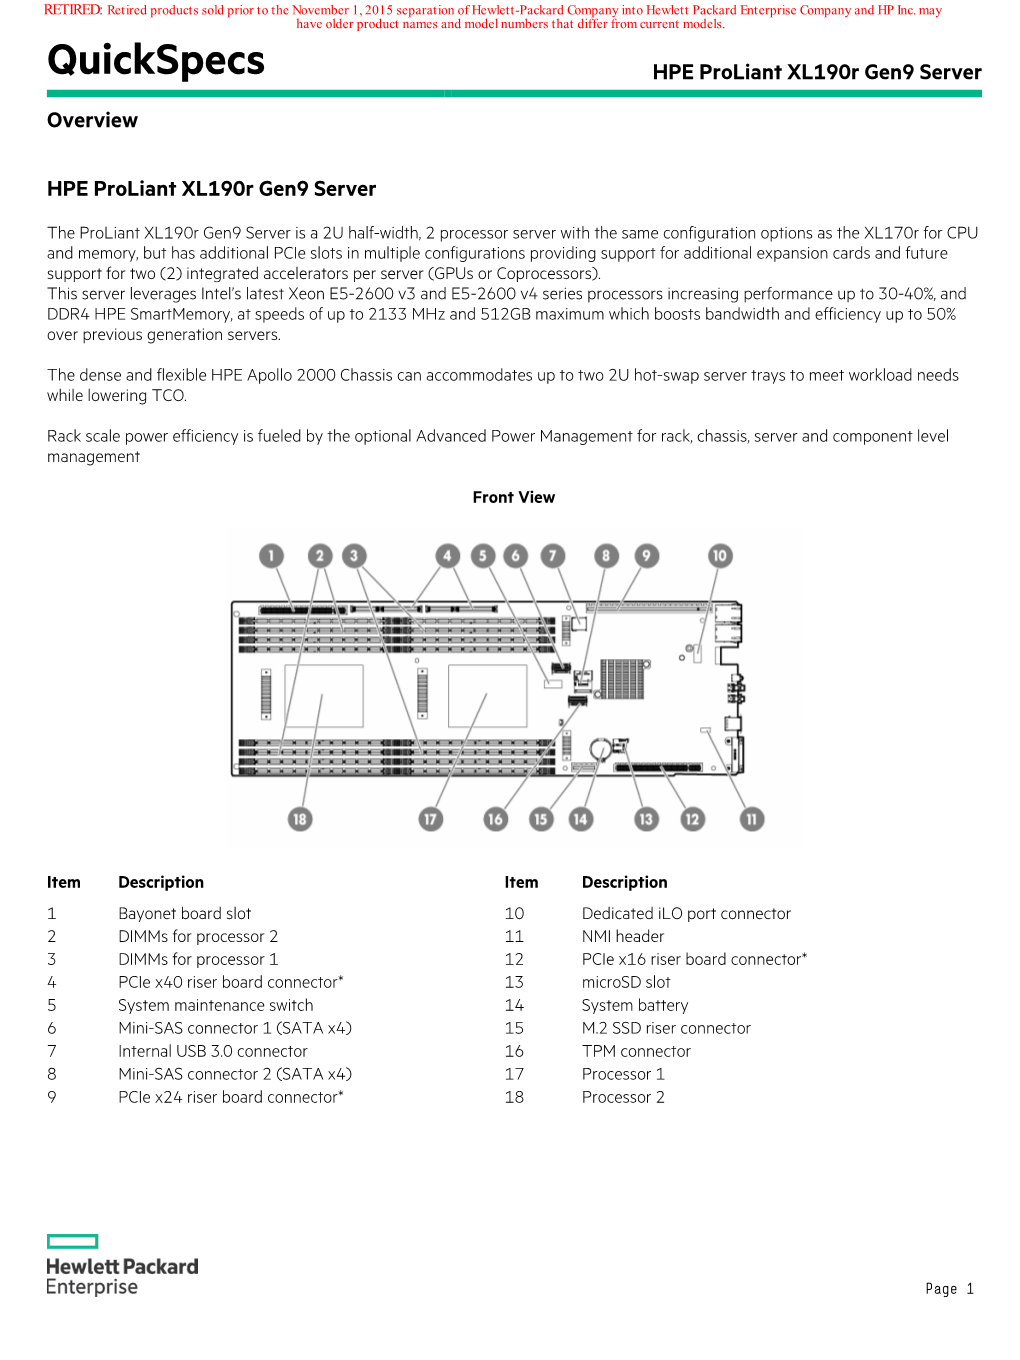 Quickspecs HPE Proliant Xl190r Gen9 Server Overview